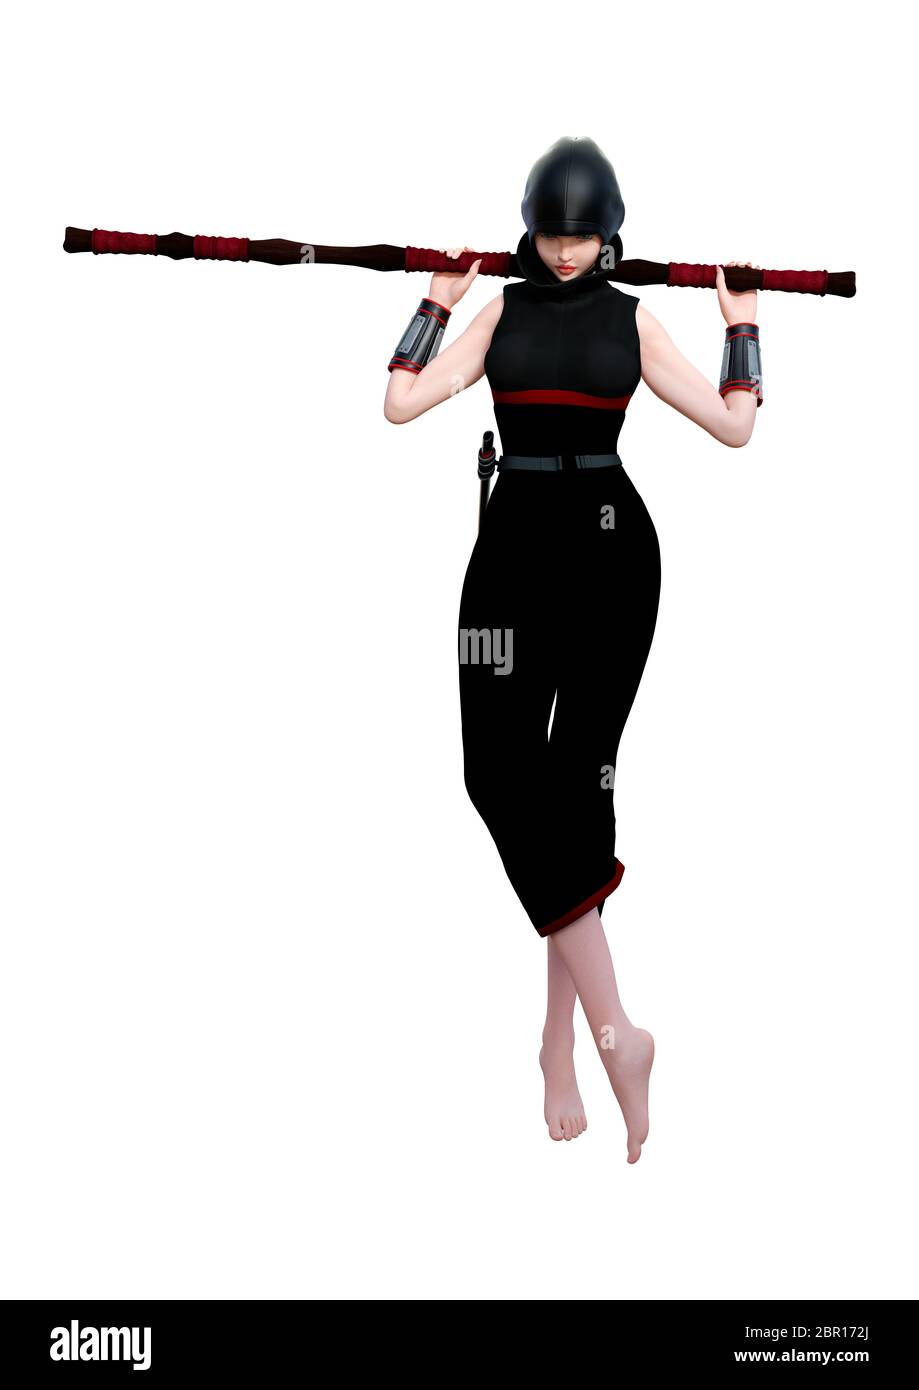 20+ Free Female Ninja & Ninja Images - Pixabay